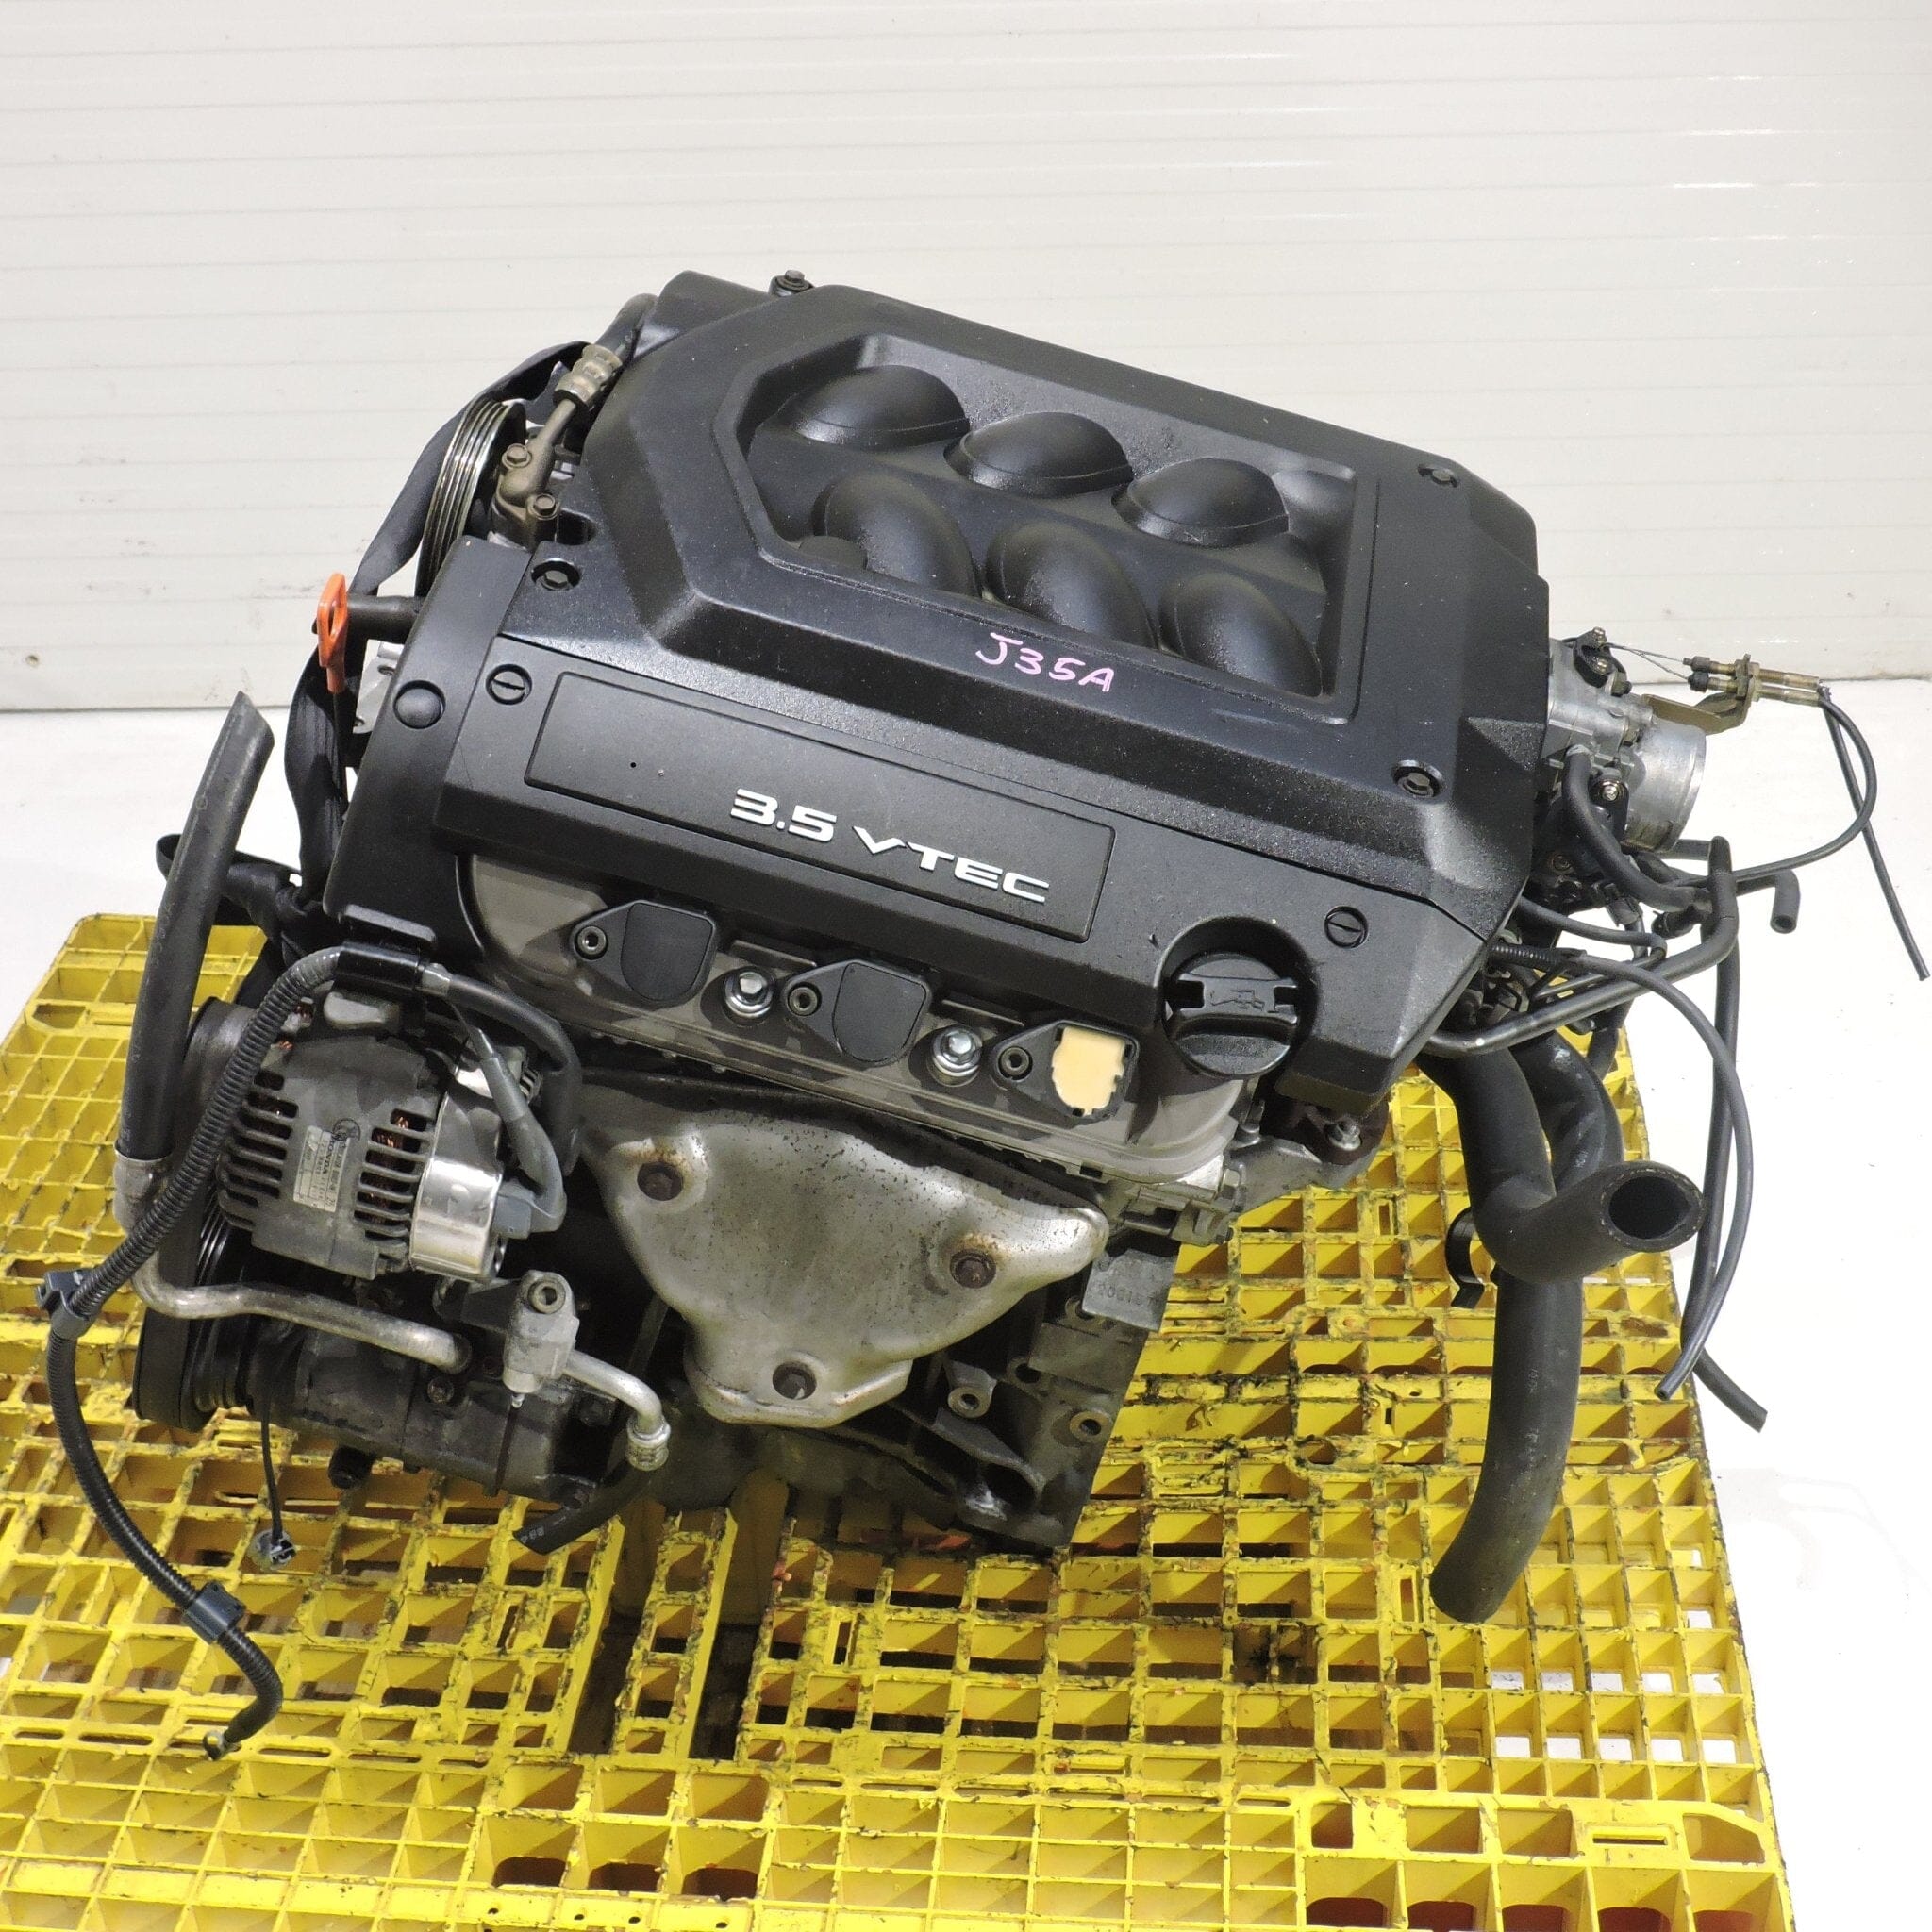 Honda Odyssey 1999-2001 3.5L V6 JDM Engine - J35a